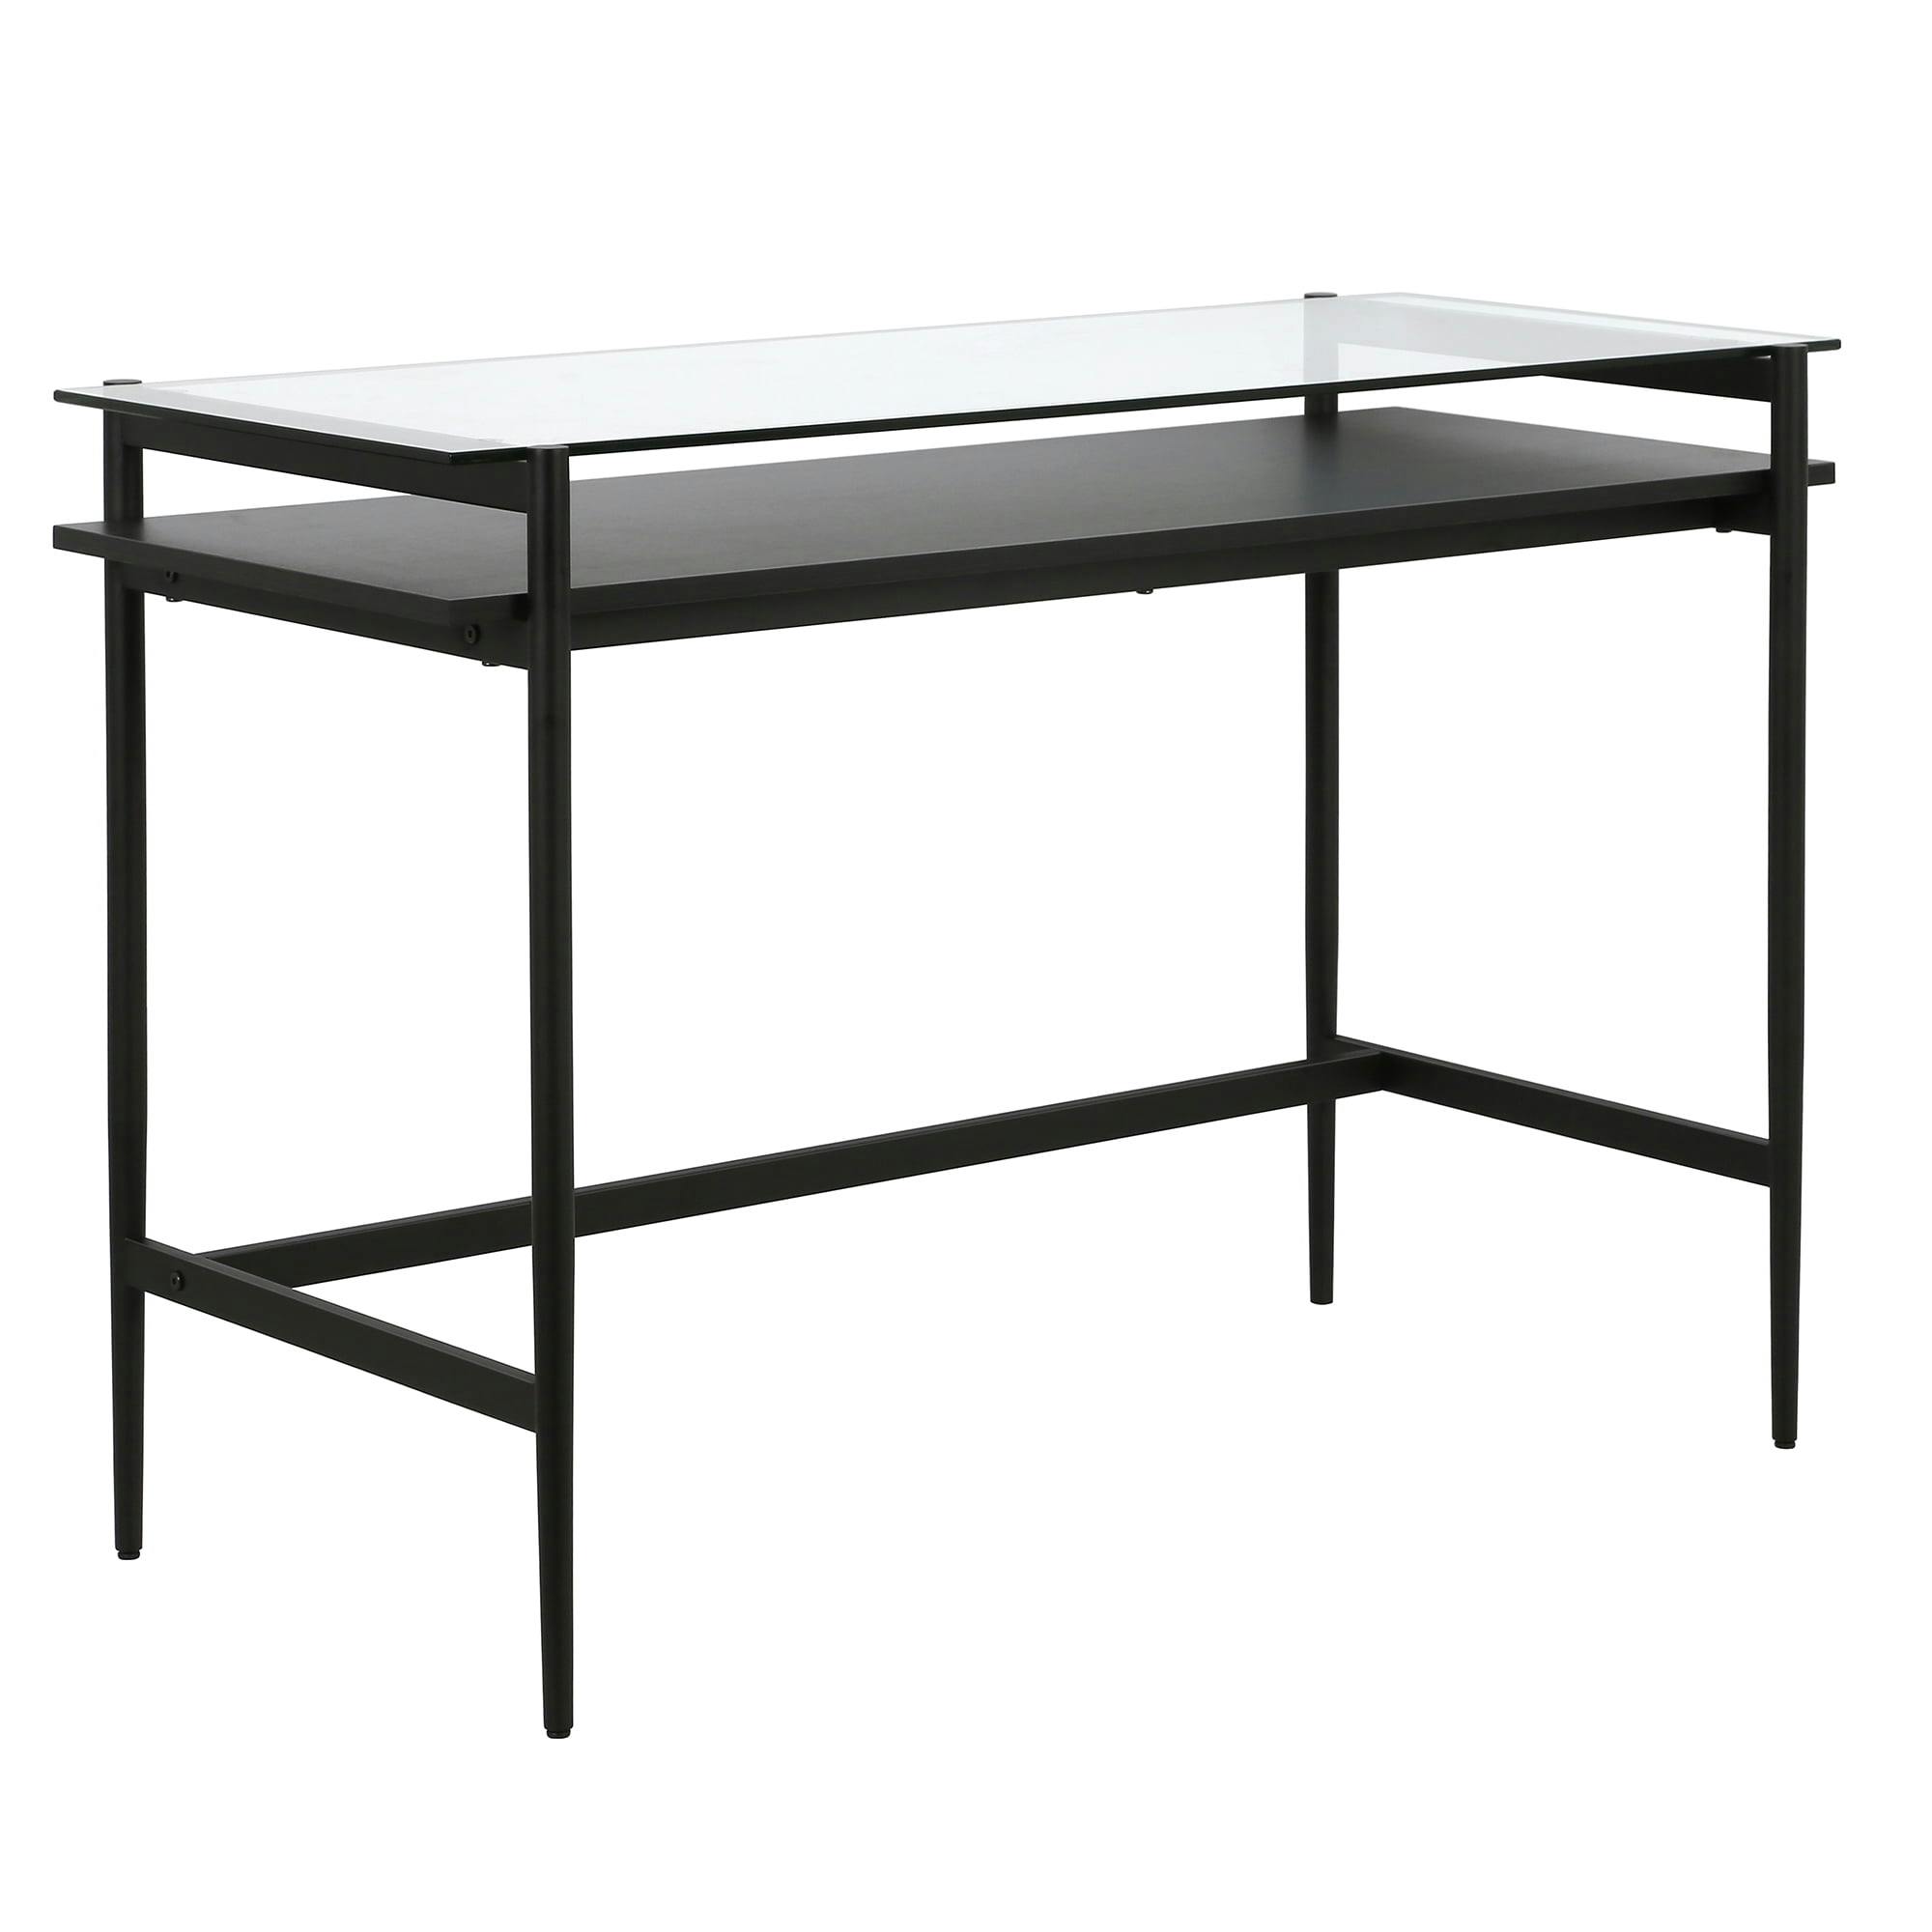 Eaton 46" Blackened Bronze Desk with Glass Top and Woodgrain Shelf